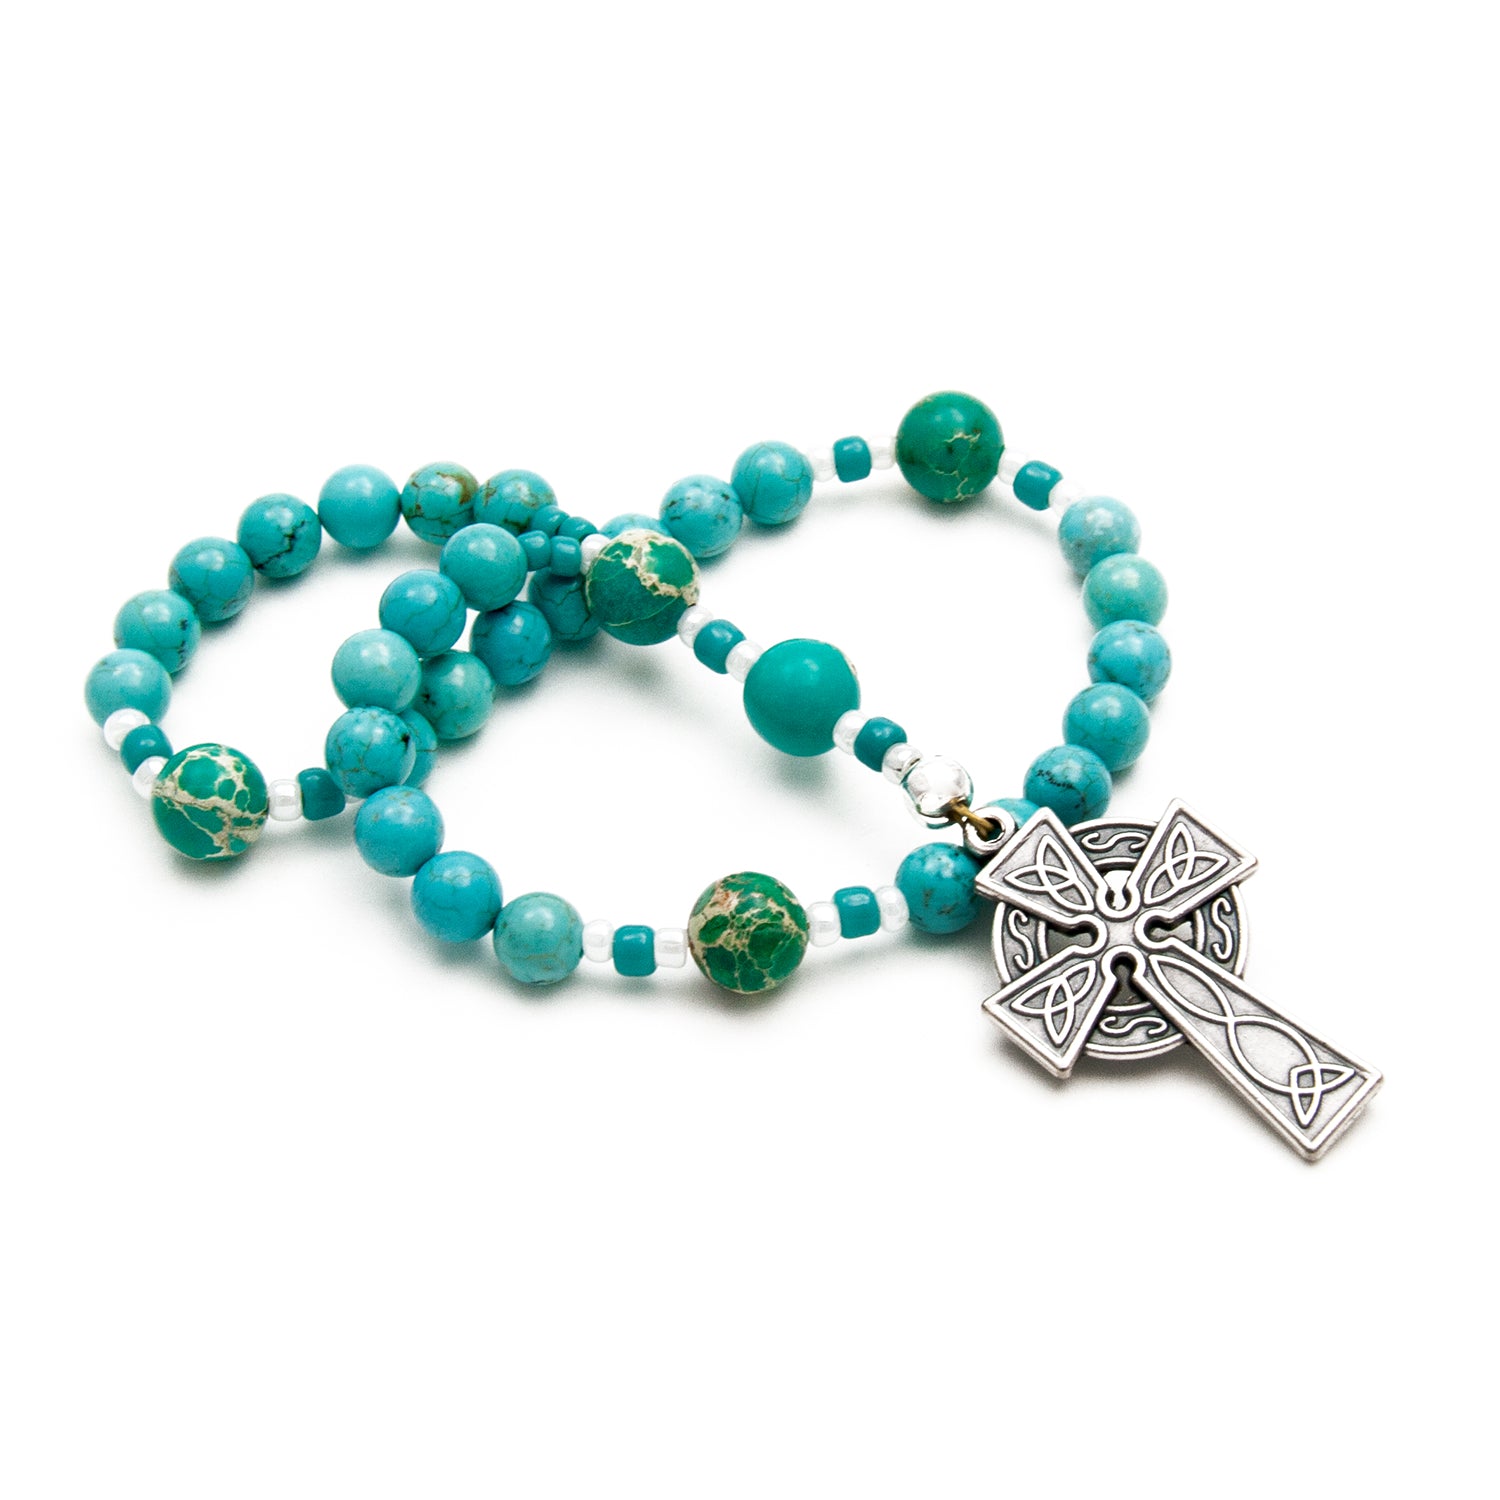 Turquoise Celtic Protestant Prayer Beads